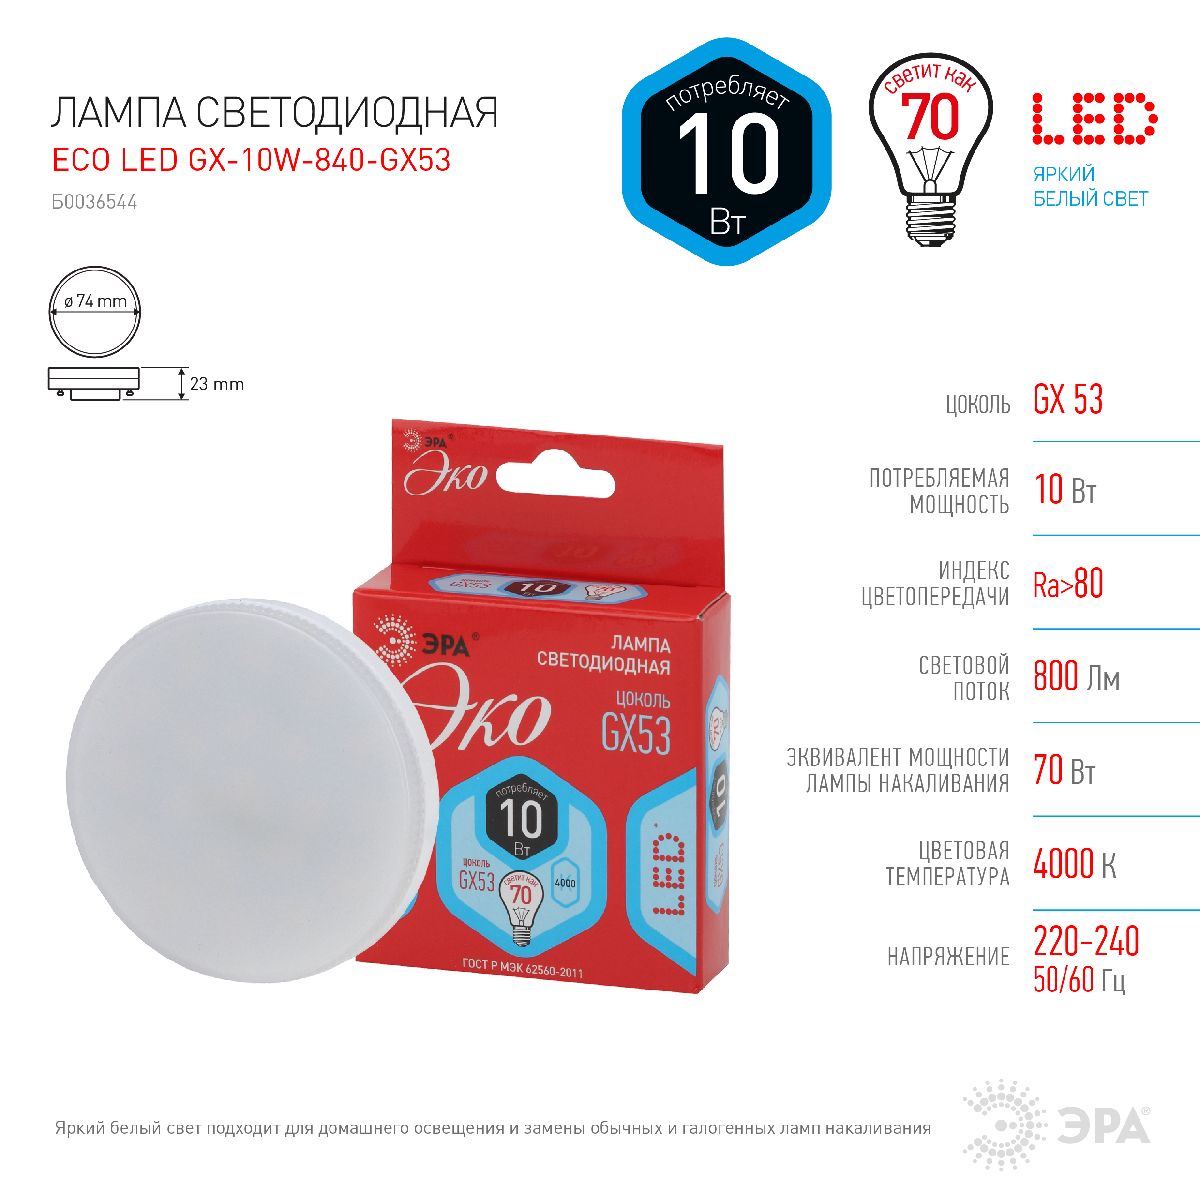 Лампа светодиодная Эра GX53 10W 4000K ECO LED GX-10W-840-GX53 Б0036544